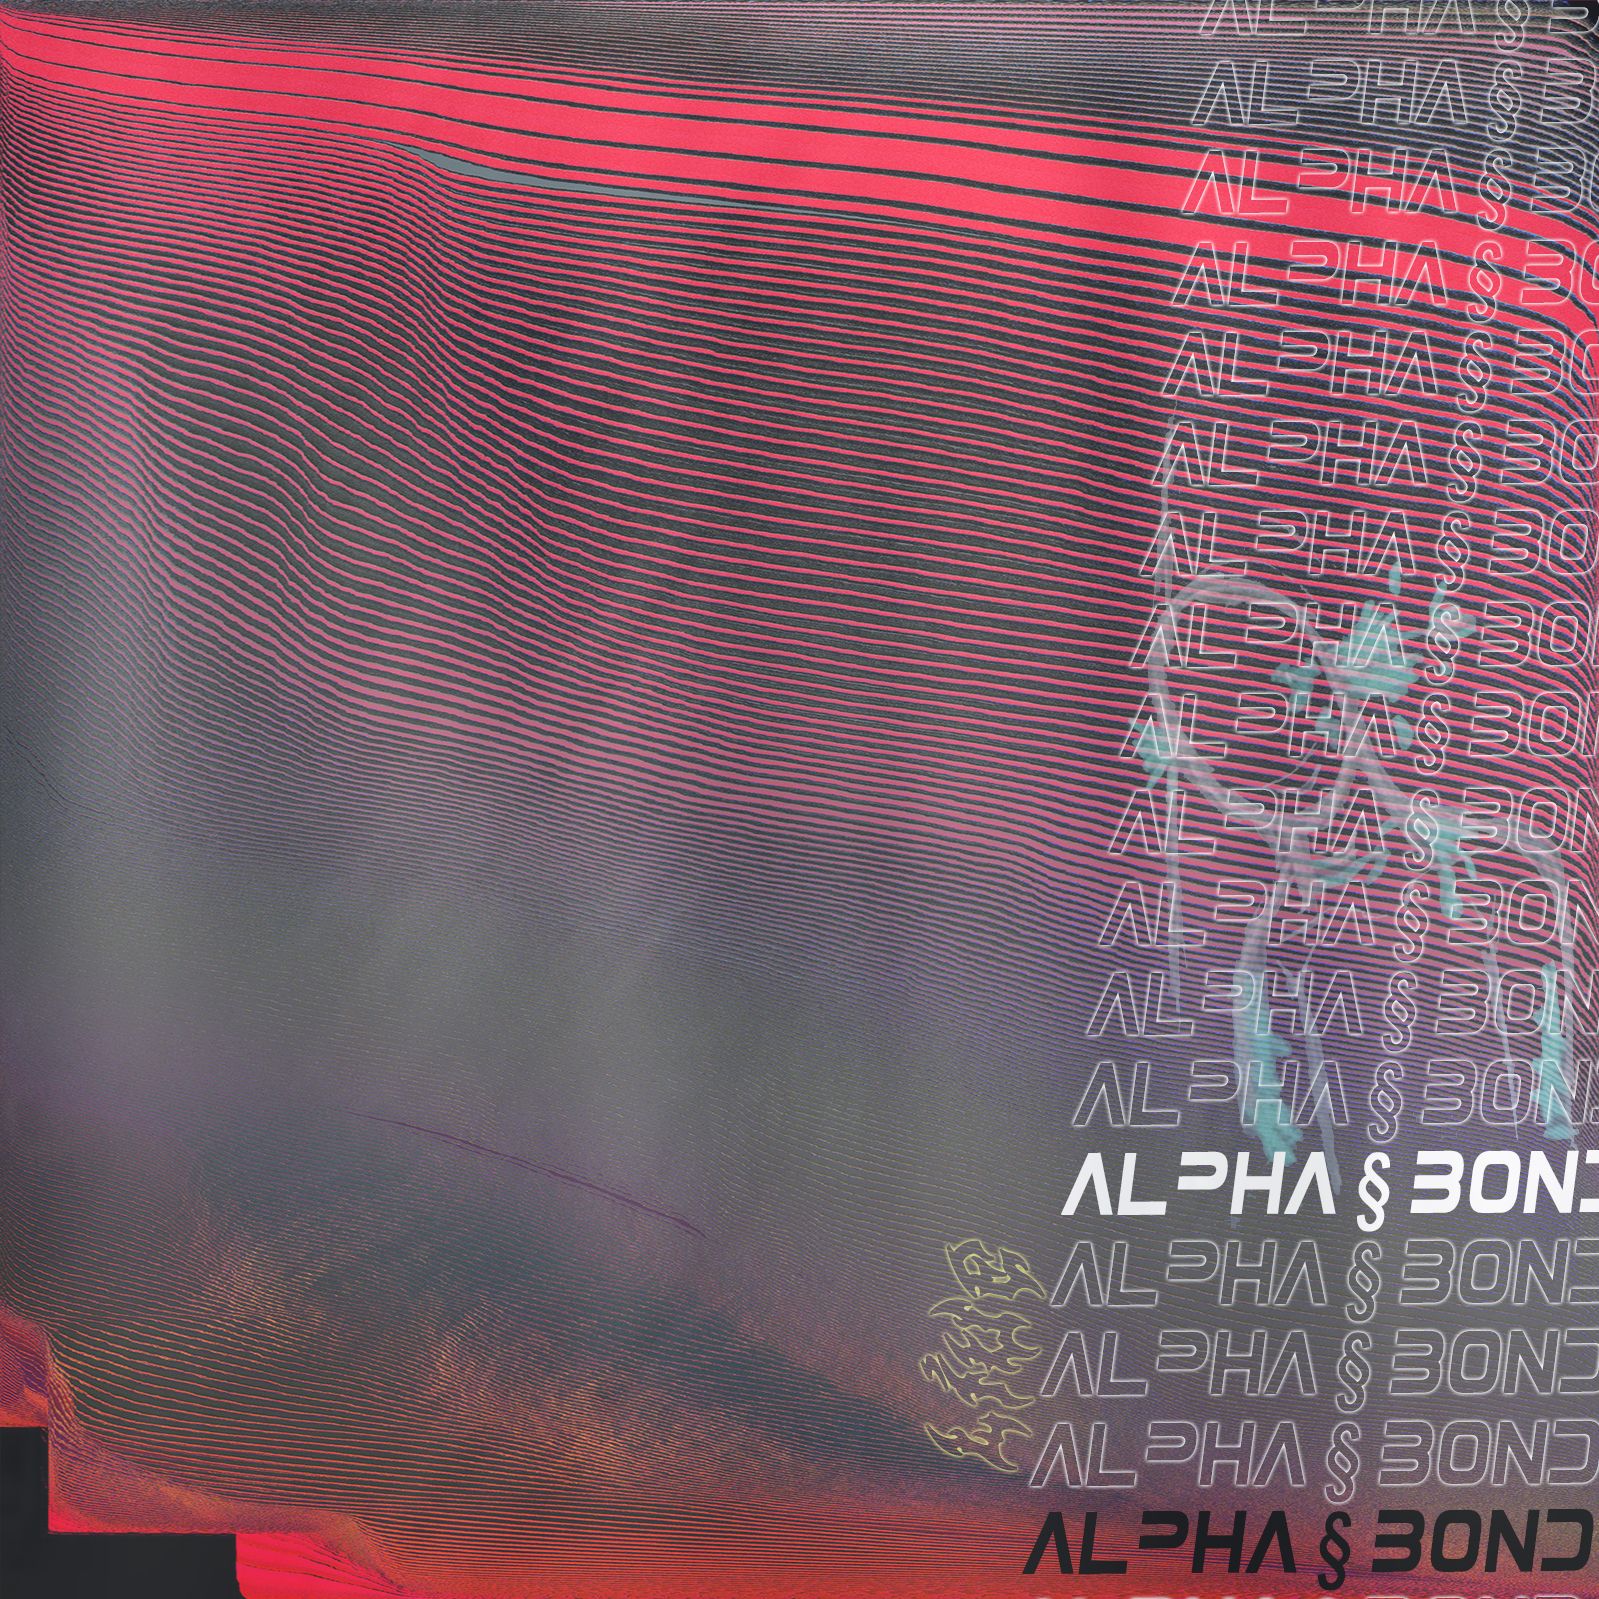 Muat turun alpha § bond